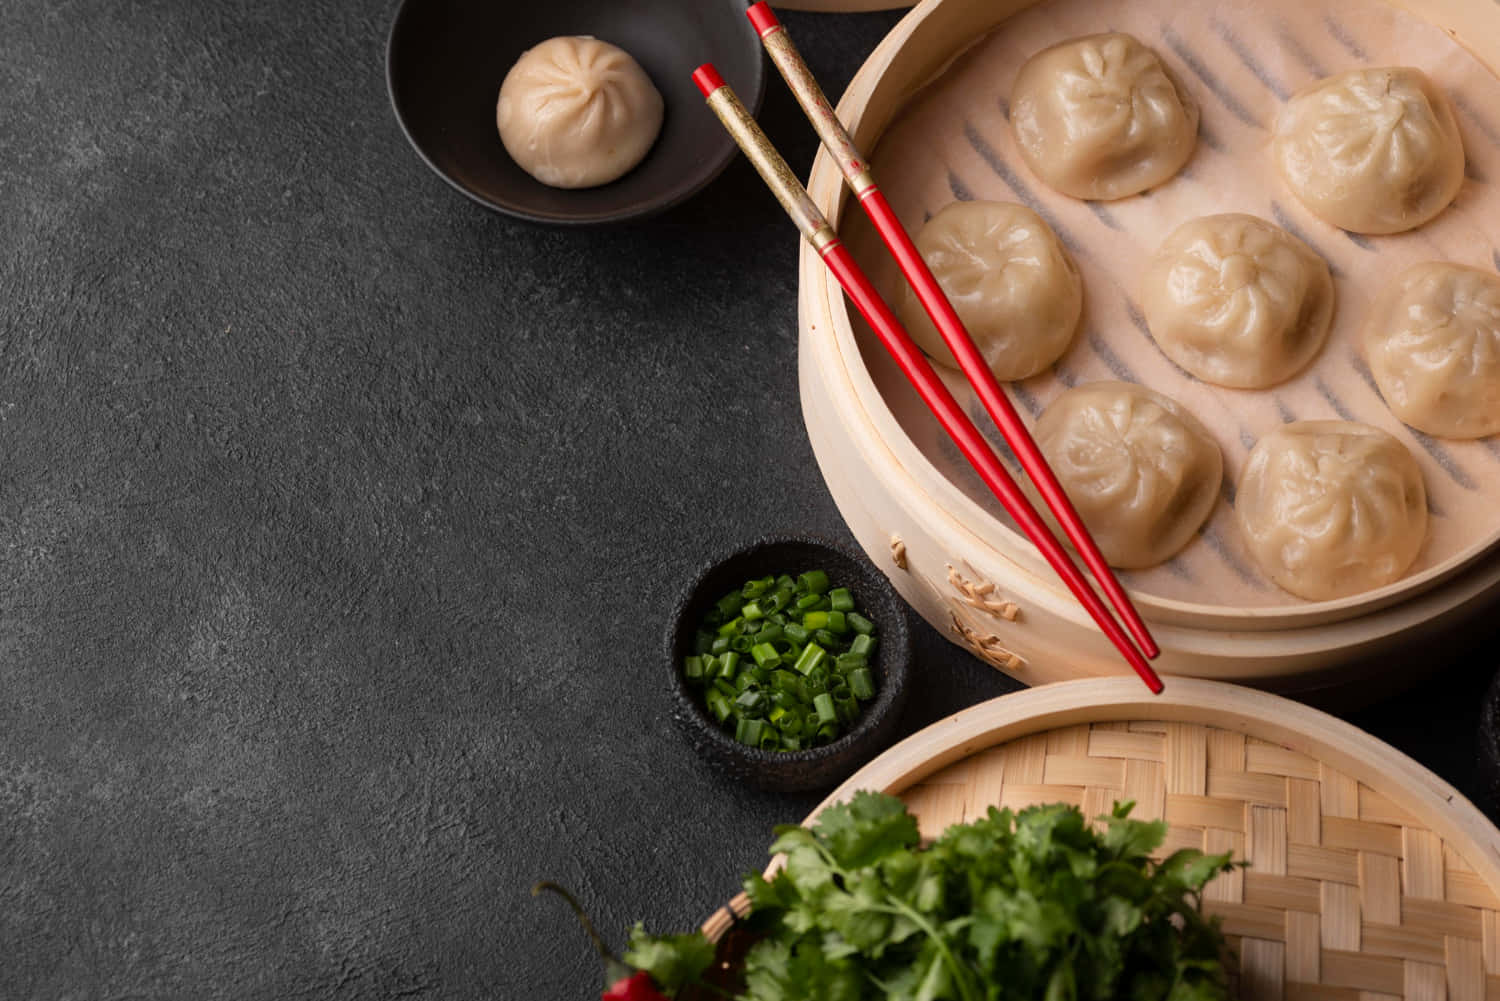 Dumplings, Chopsticks And Vegetables On A Dark Background